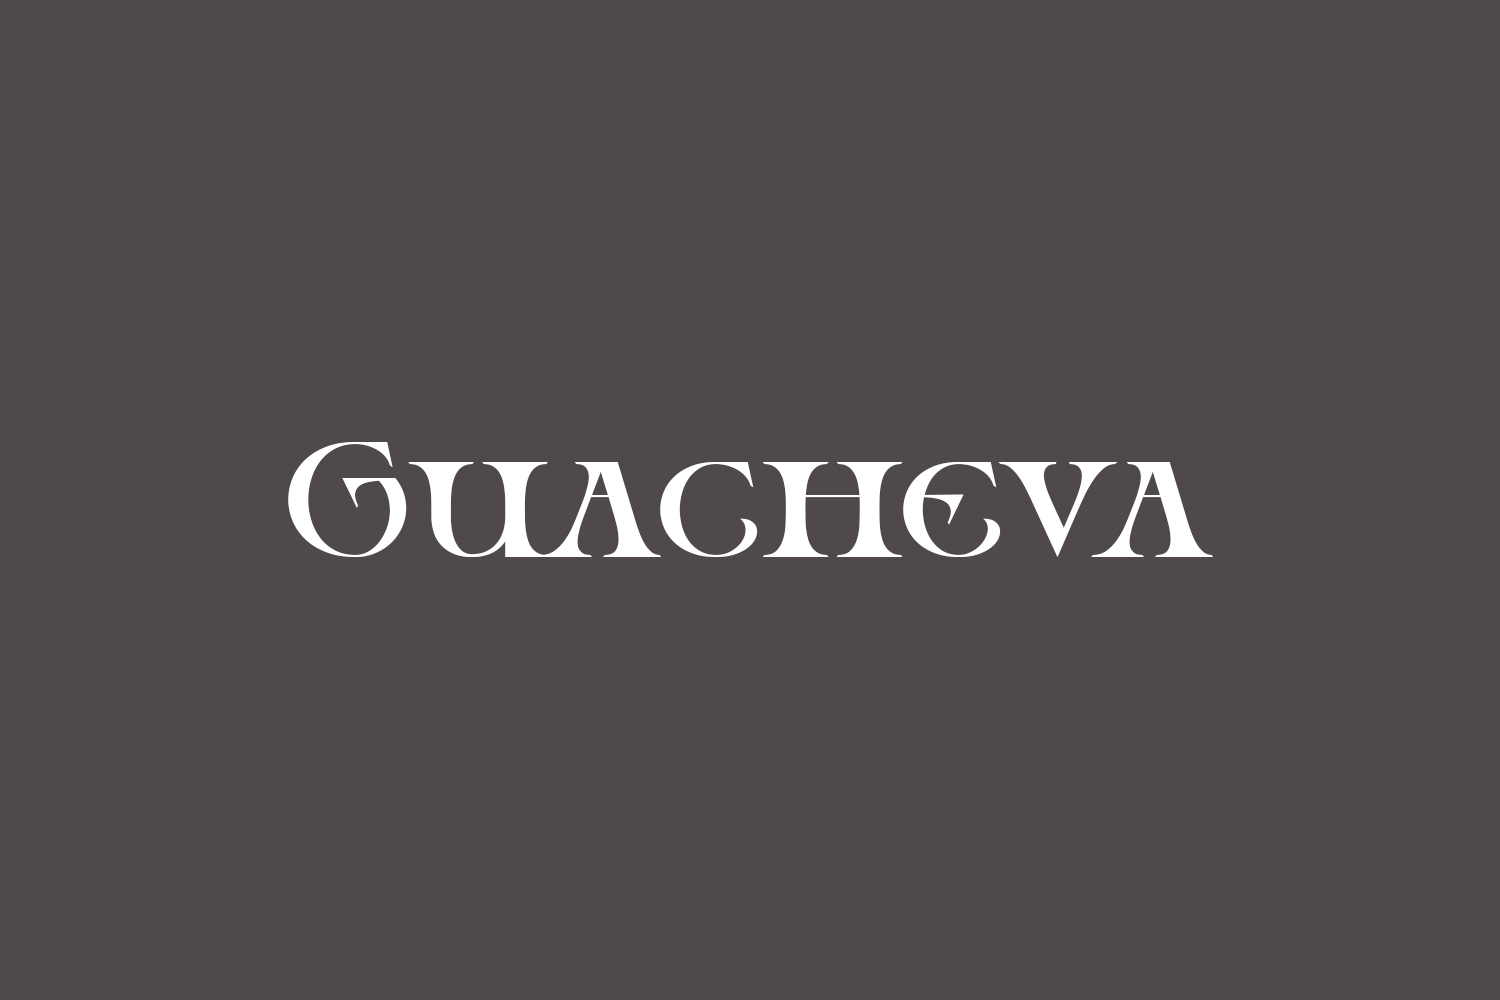 Guacheva Free Font